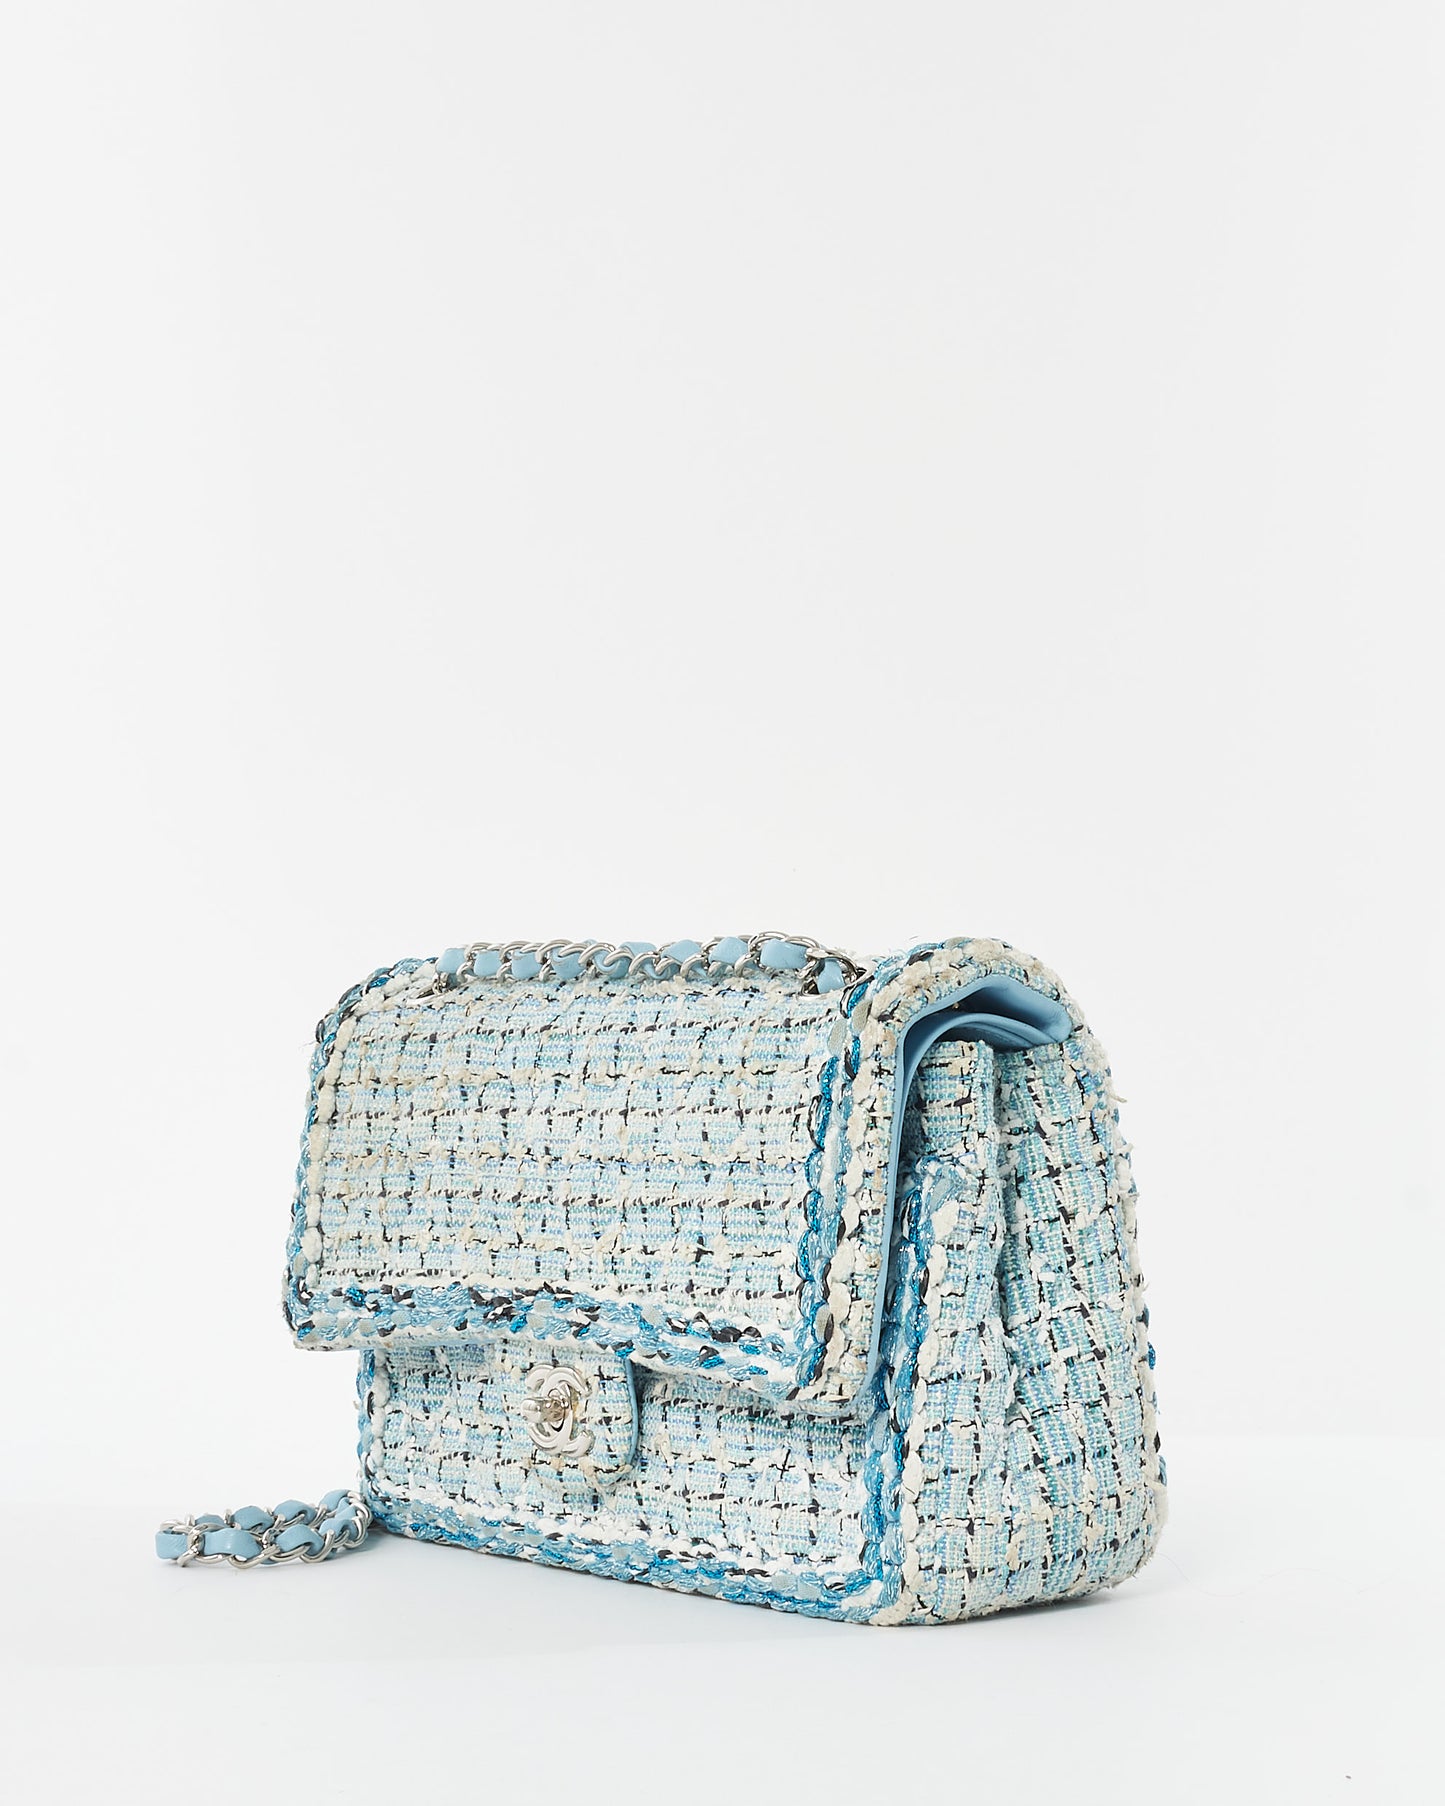 Chanel Blue & White Tweed Cruise 2019 Medium Classic Flap Bag